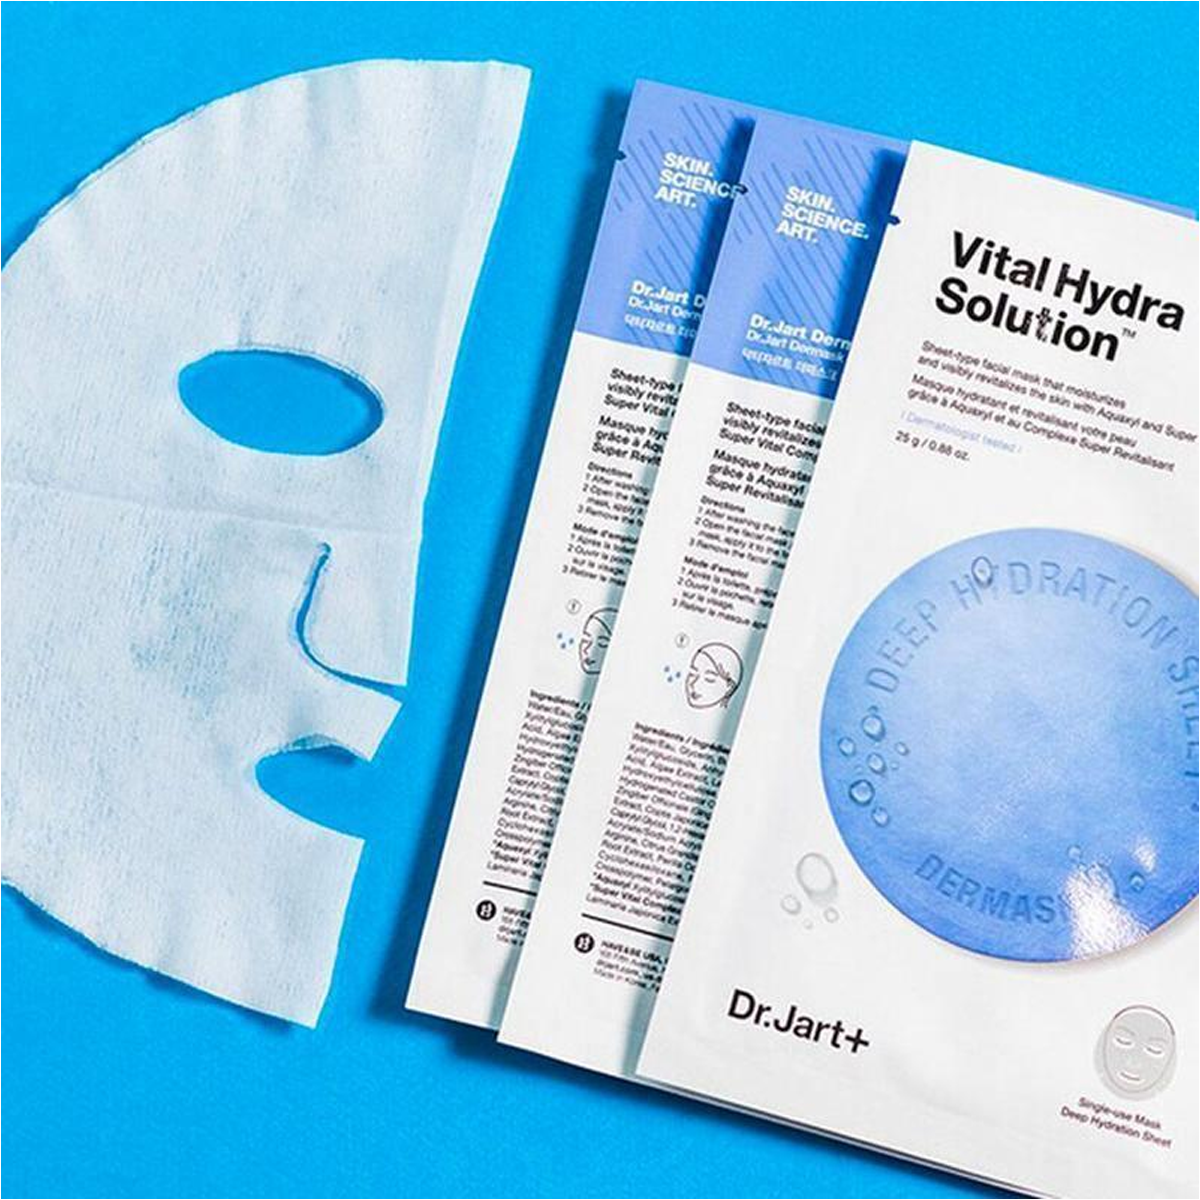 Dr. Jart+ - Dermask Water Jet Vital Hydra Solution 25g x 5pcs | Hydrating Skincare Hyaluronic Acid Moisturizing Hydrate